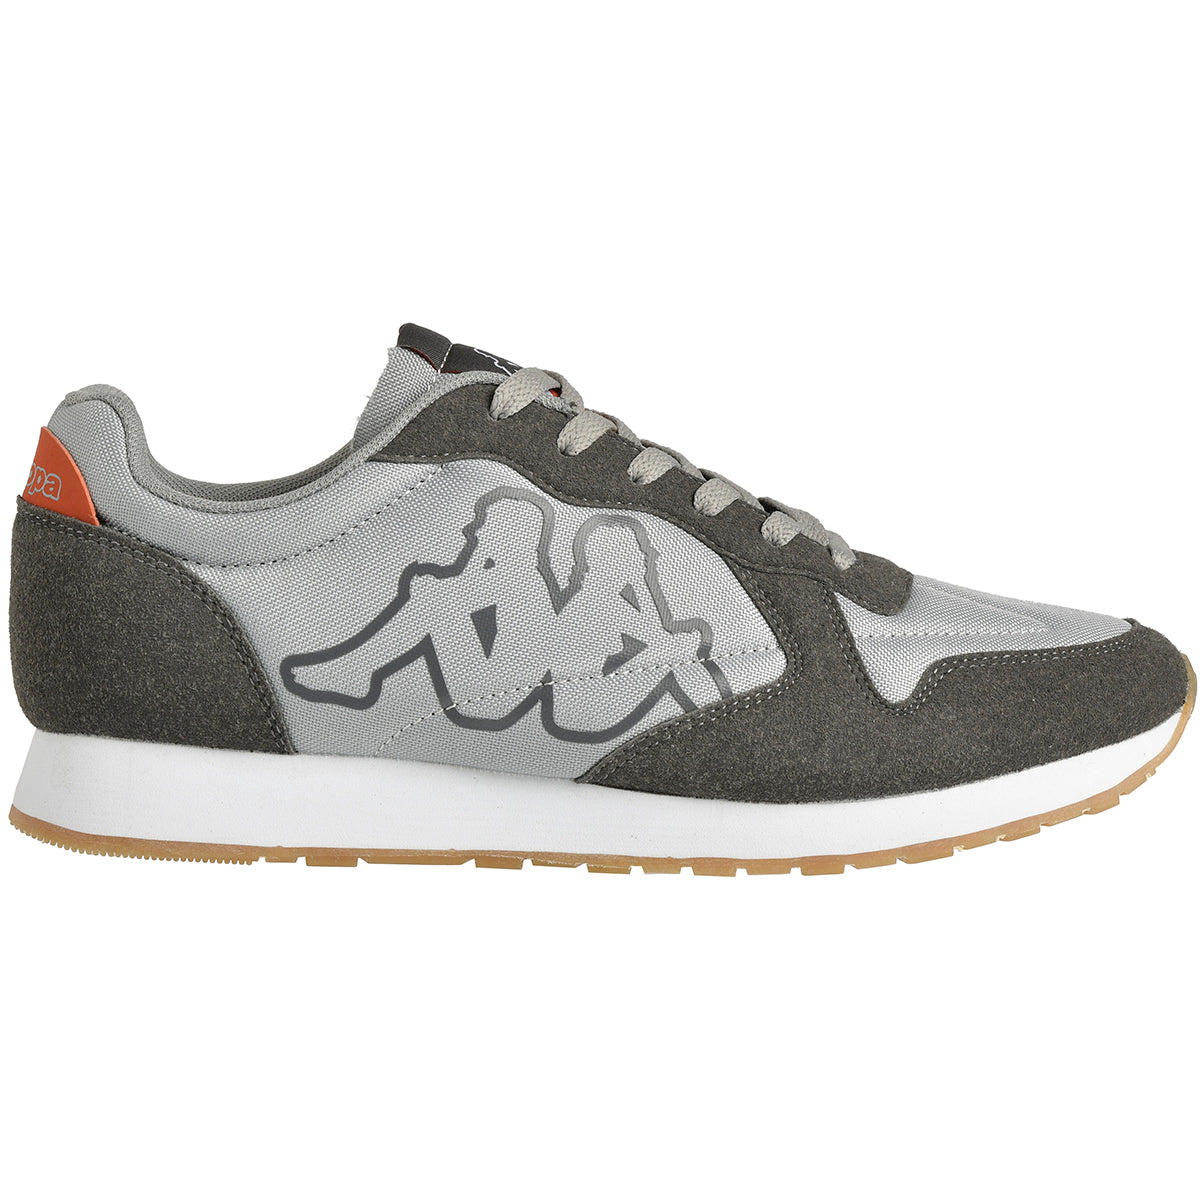 Sneakers Komaya gris homme - Image 1